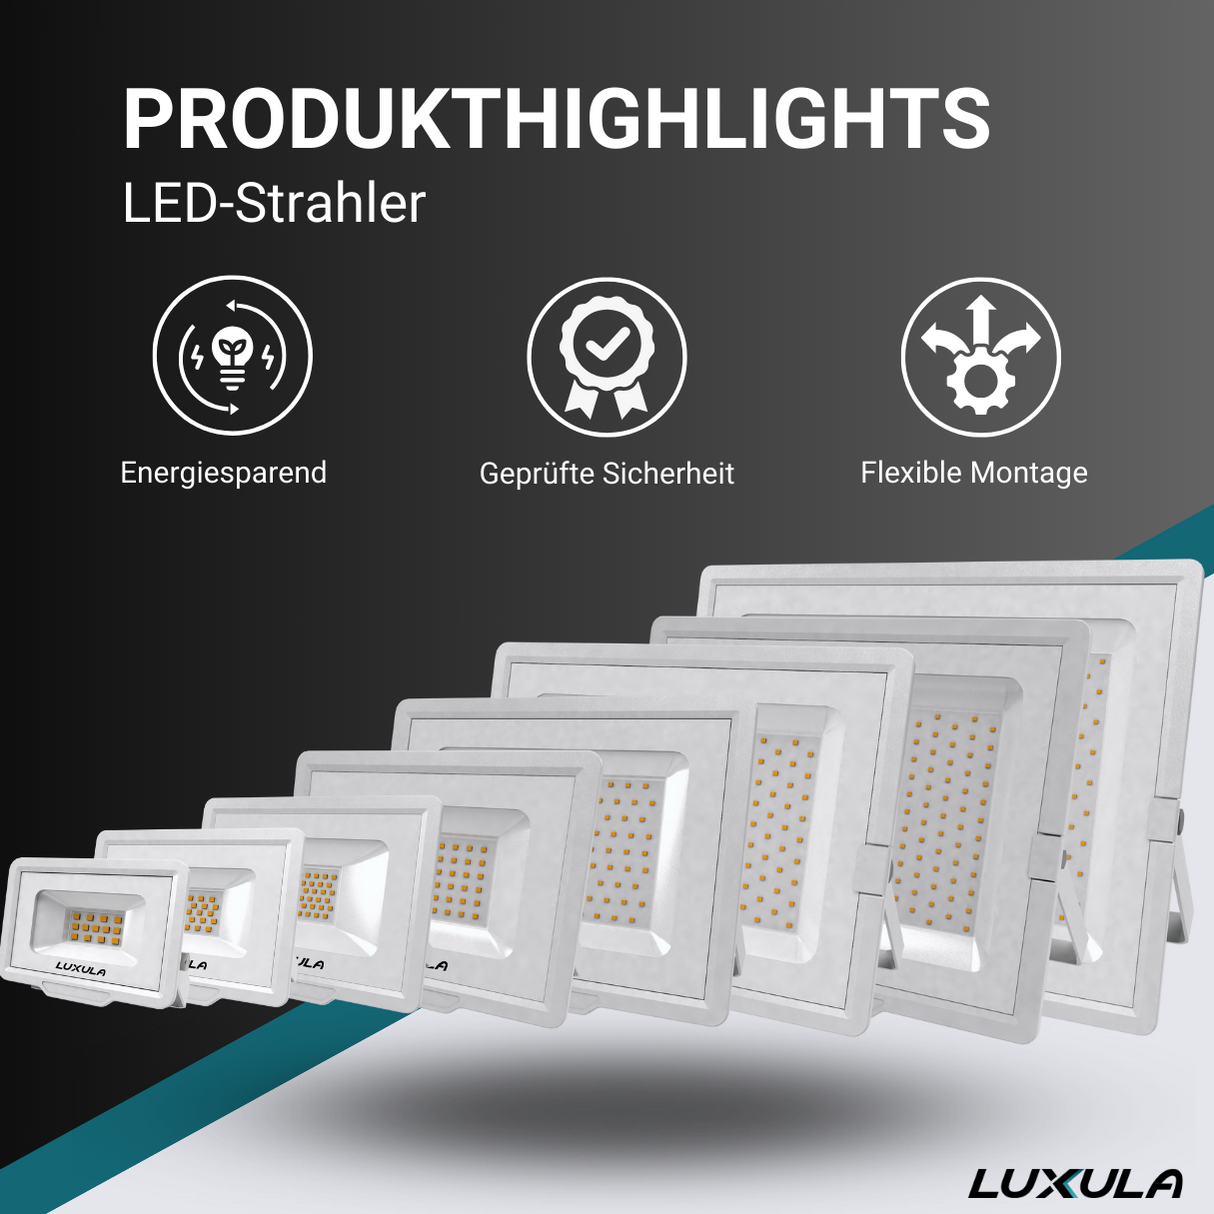 LED-Fluter, 150 W, 3000 K (warmweiß), 15000 lm, weiß, IP65, TÜV-geprüft